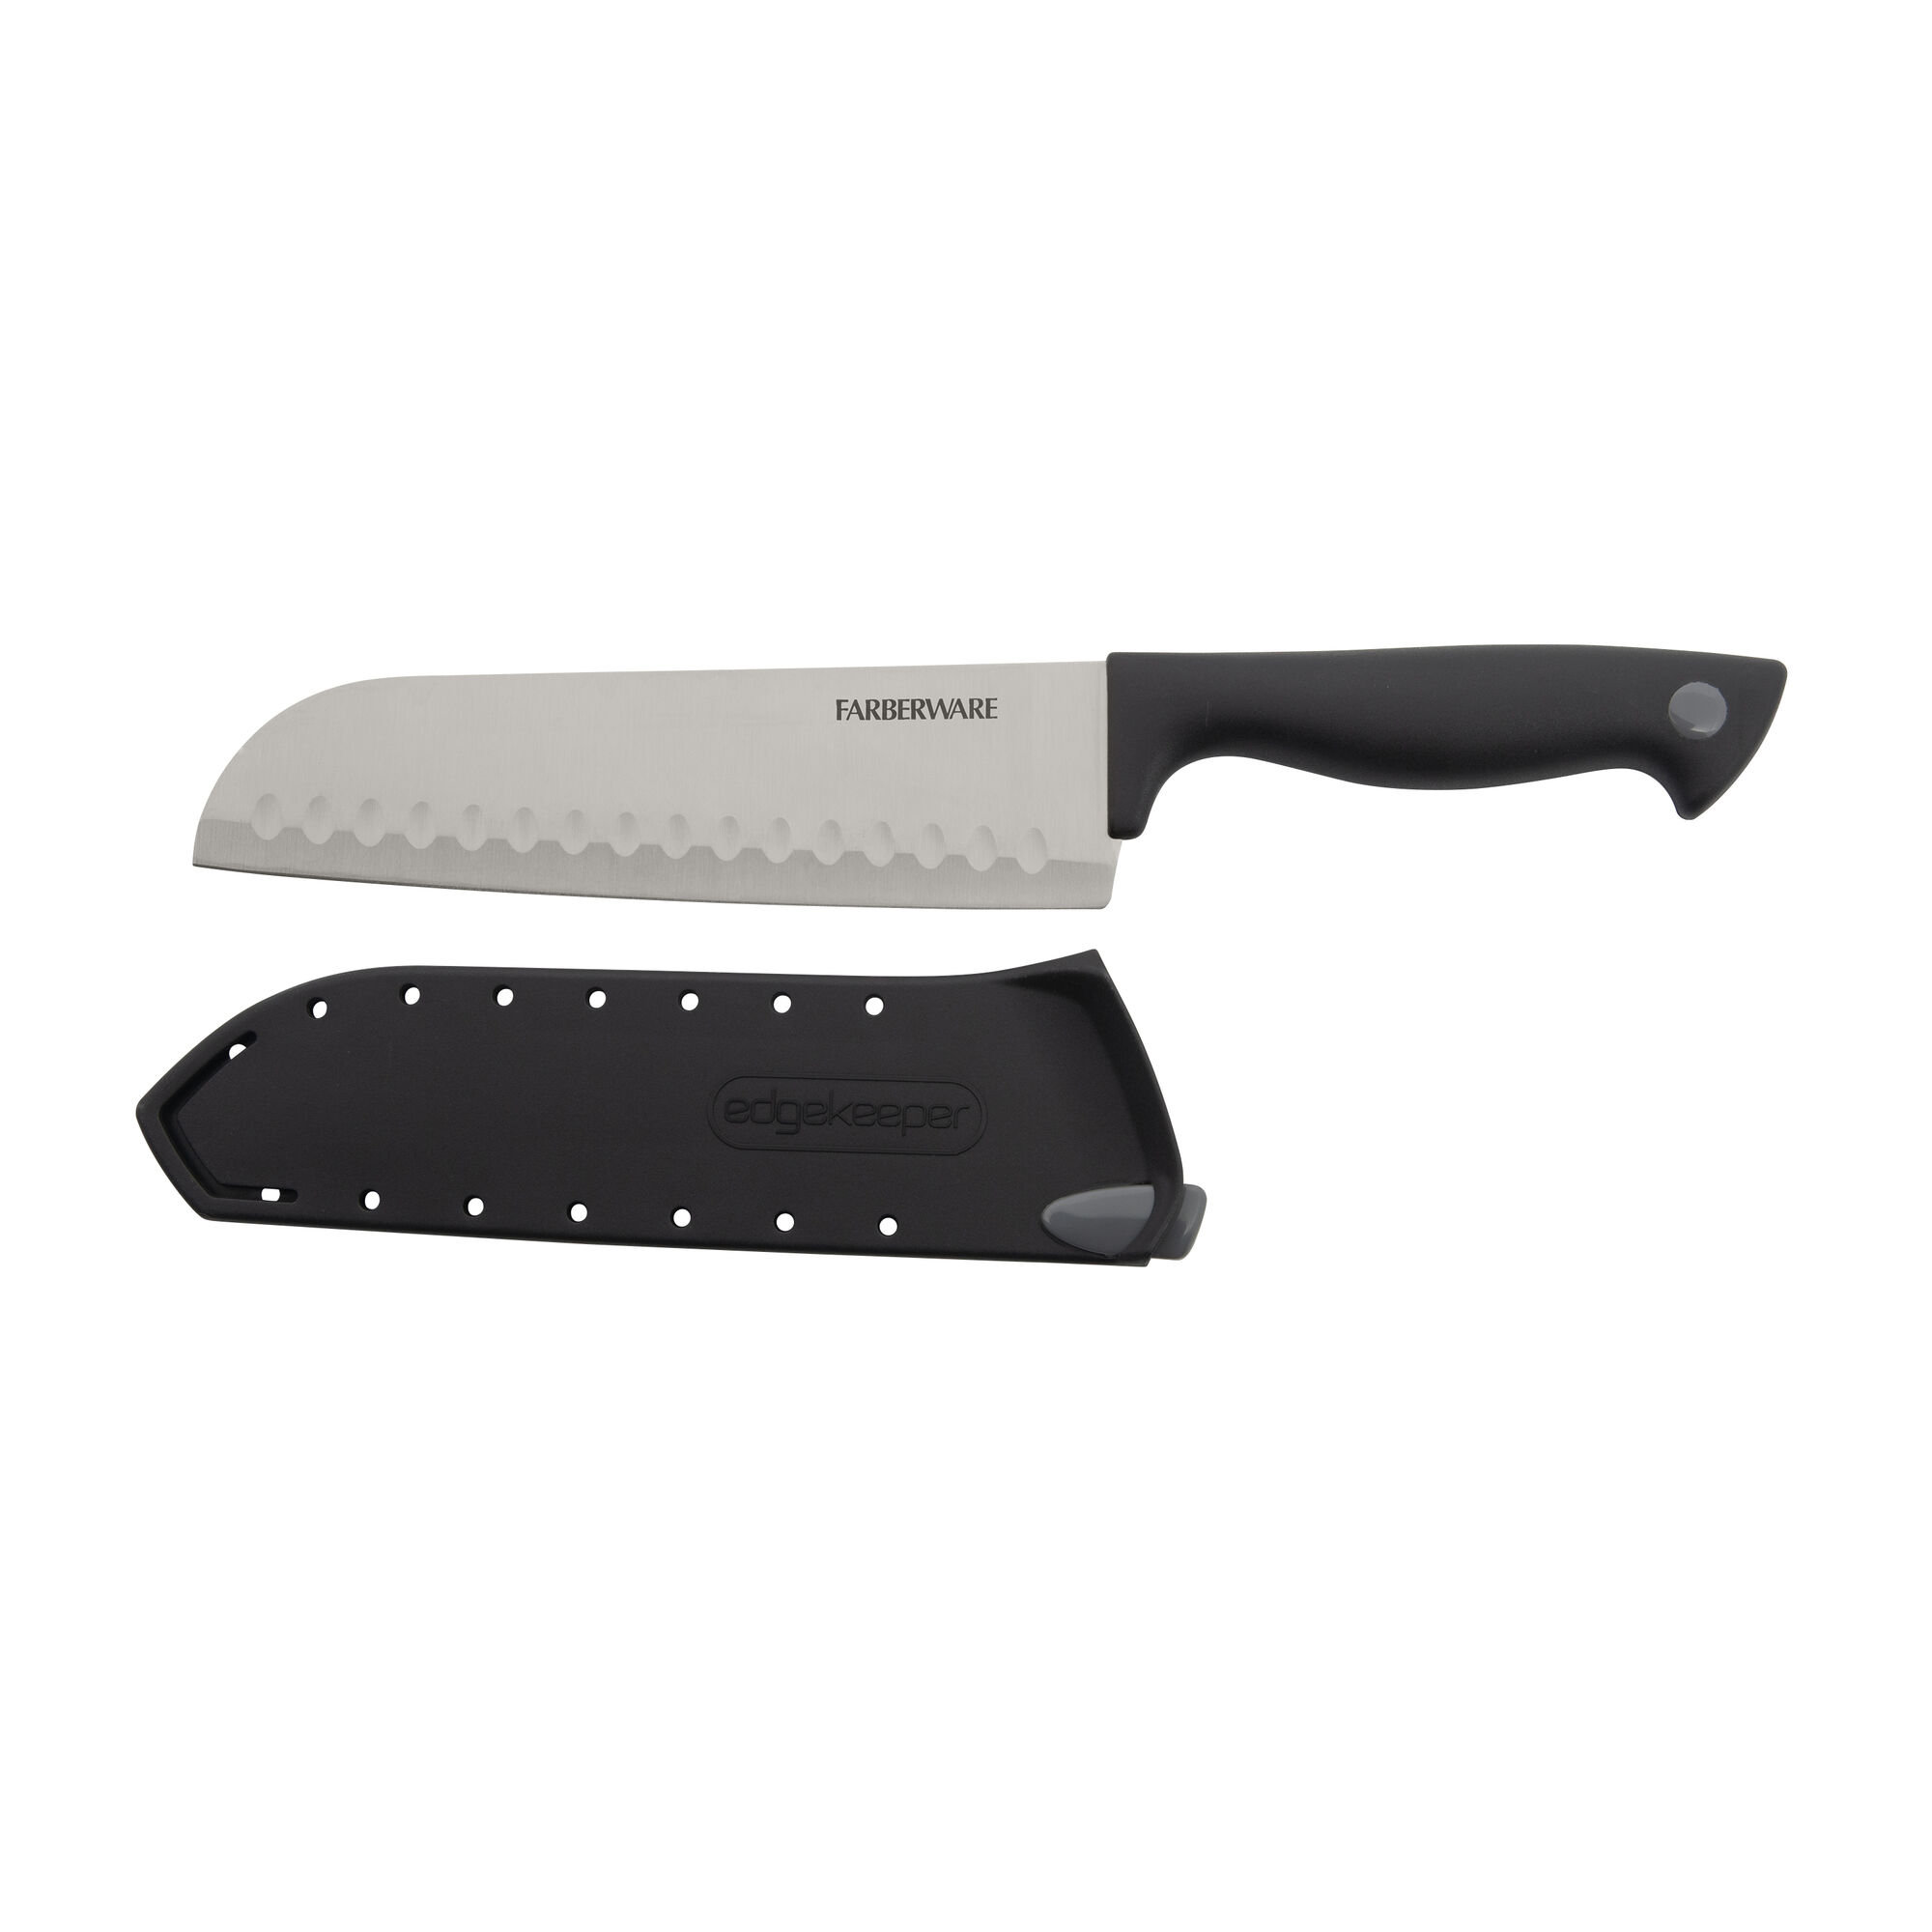 Farberware Ceramic 5- inch Santoku Knife with Custom-Fit Blade Cover, Razor-Sharp Kitchen Knife with Ergonomic, Soft-Grip Handle, Dishwasher-Safe, 5